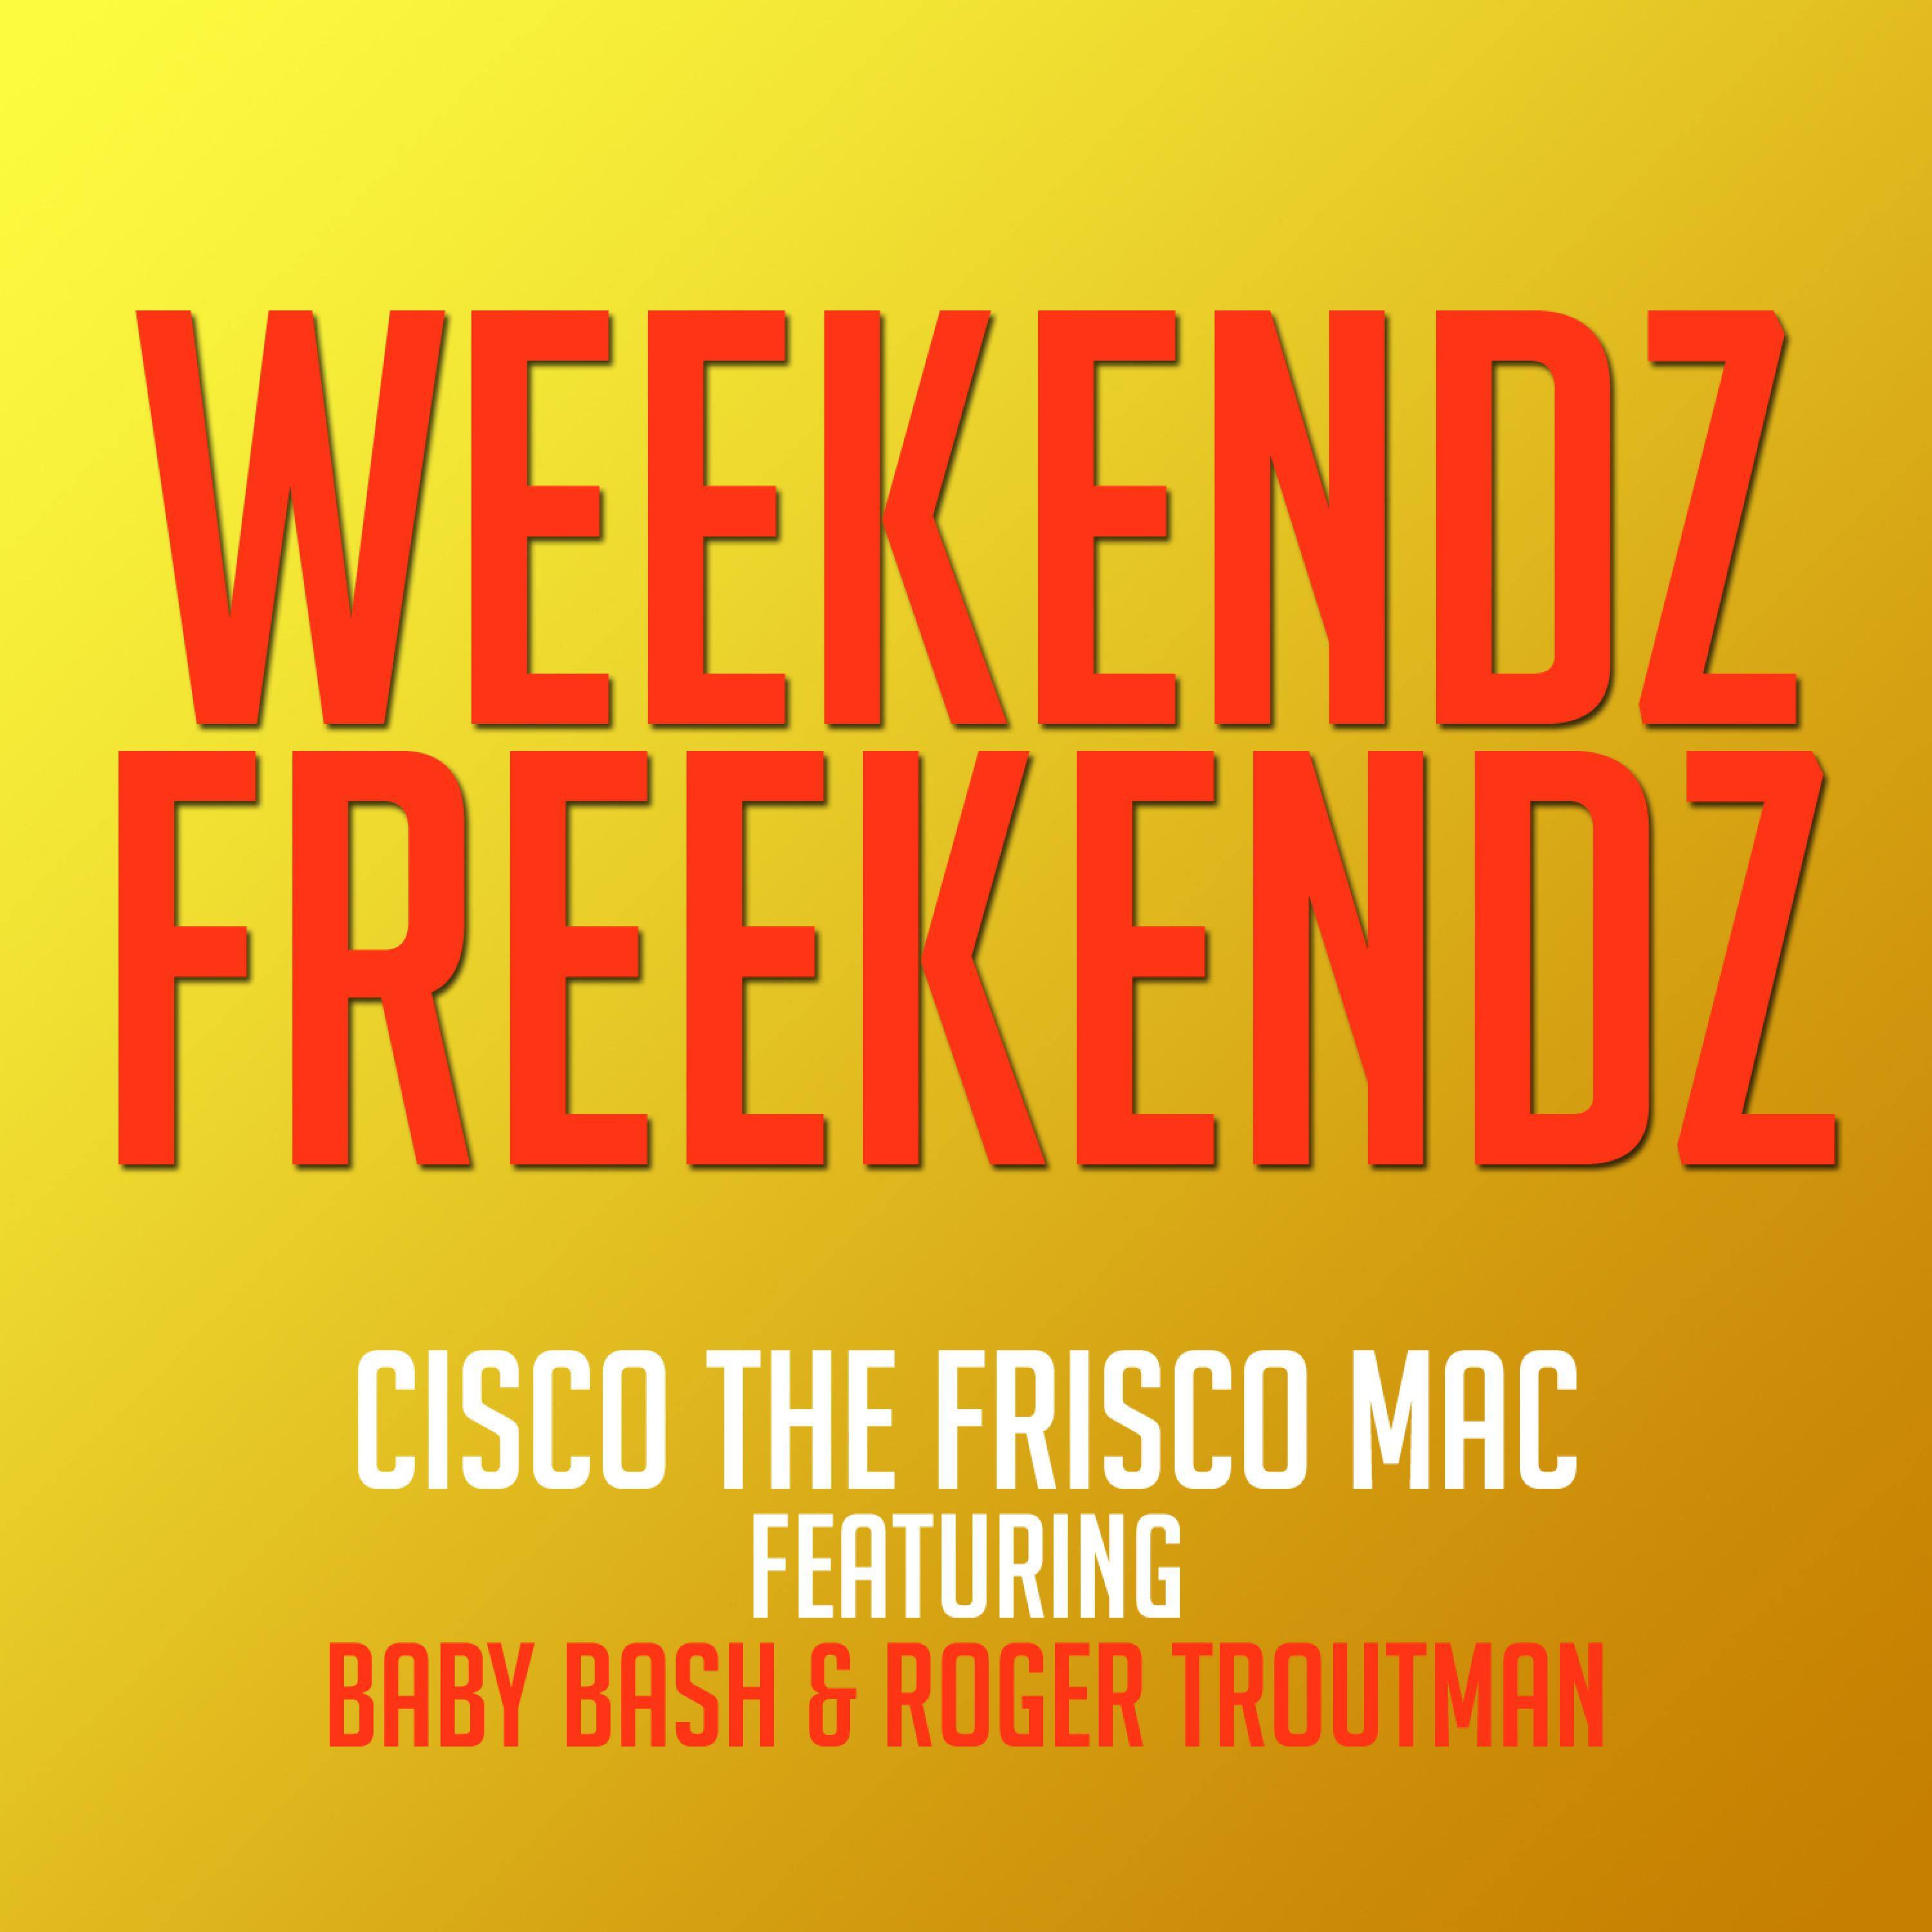 Weekendz Freekendz (feat. Baby Bash & Roger Troutman) - EP